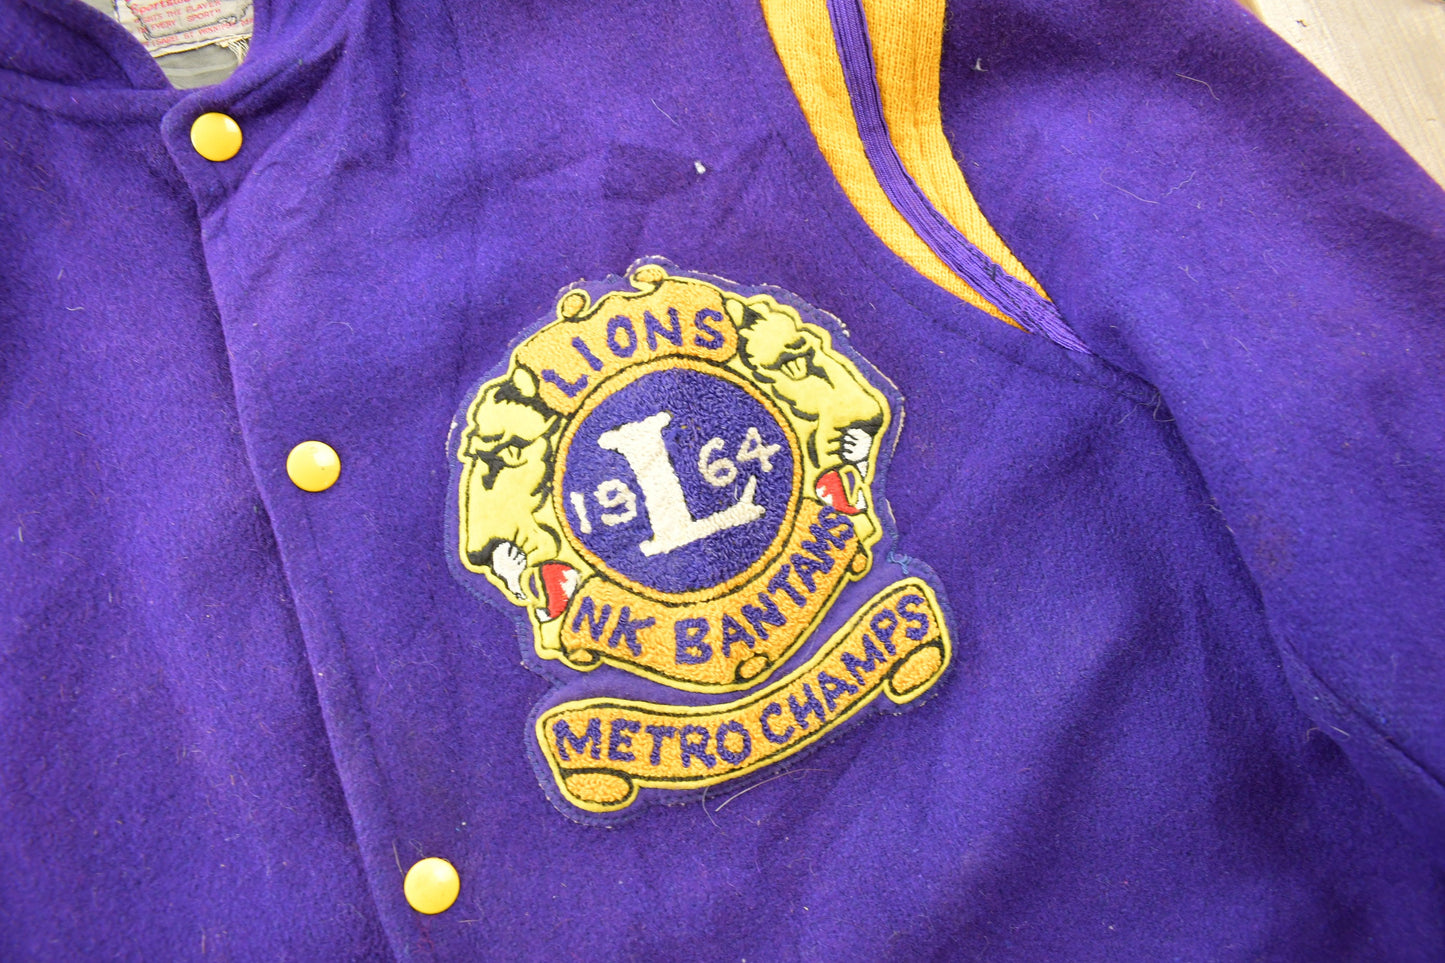 Vintage 1964 Lions NK Bantams Metro Champs Varsity Coach Jacket / Embroidered / Varsity Jacket / True Vintage / Made IN Canada / Harv-Al